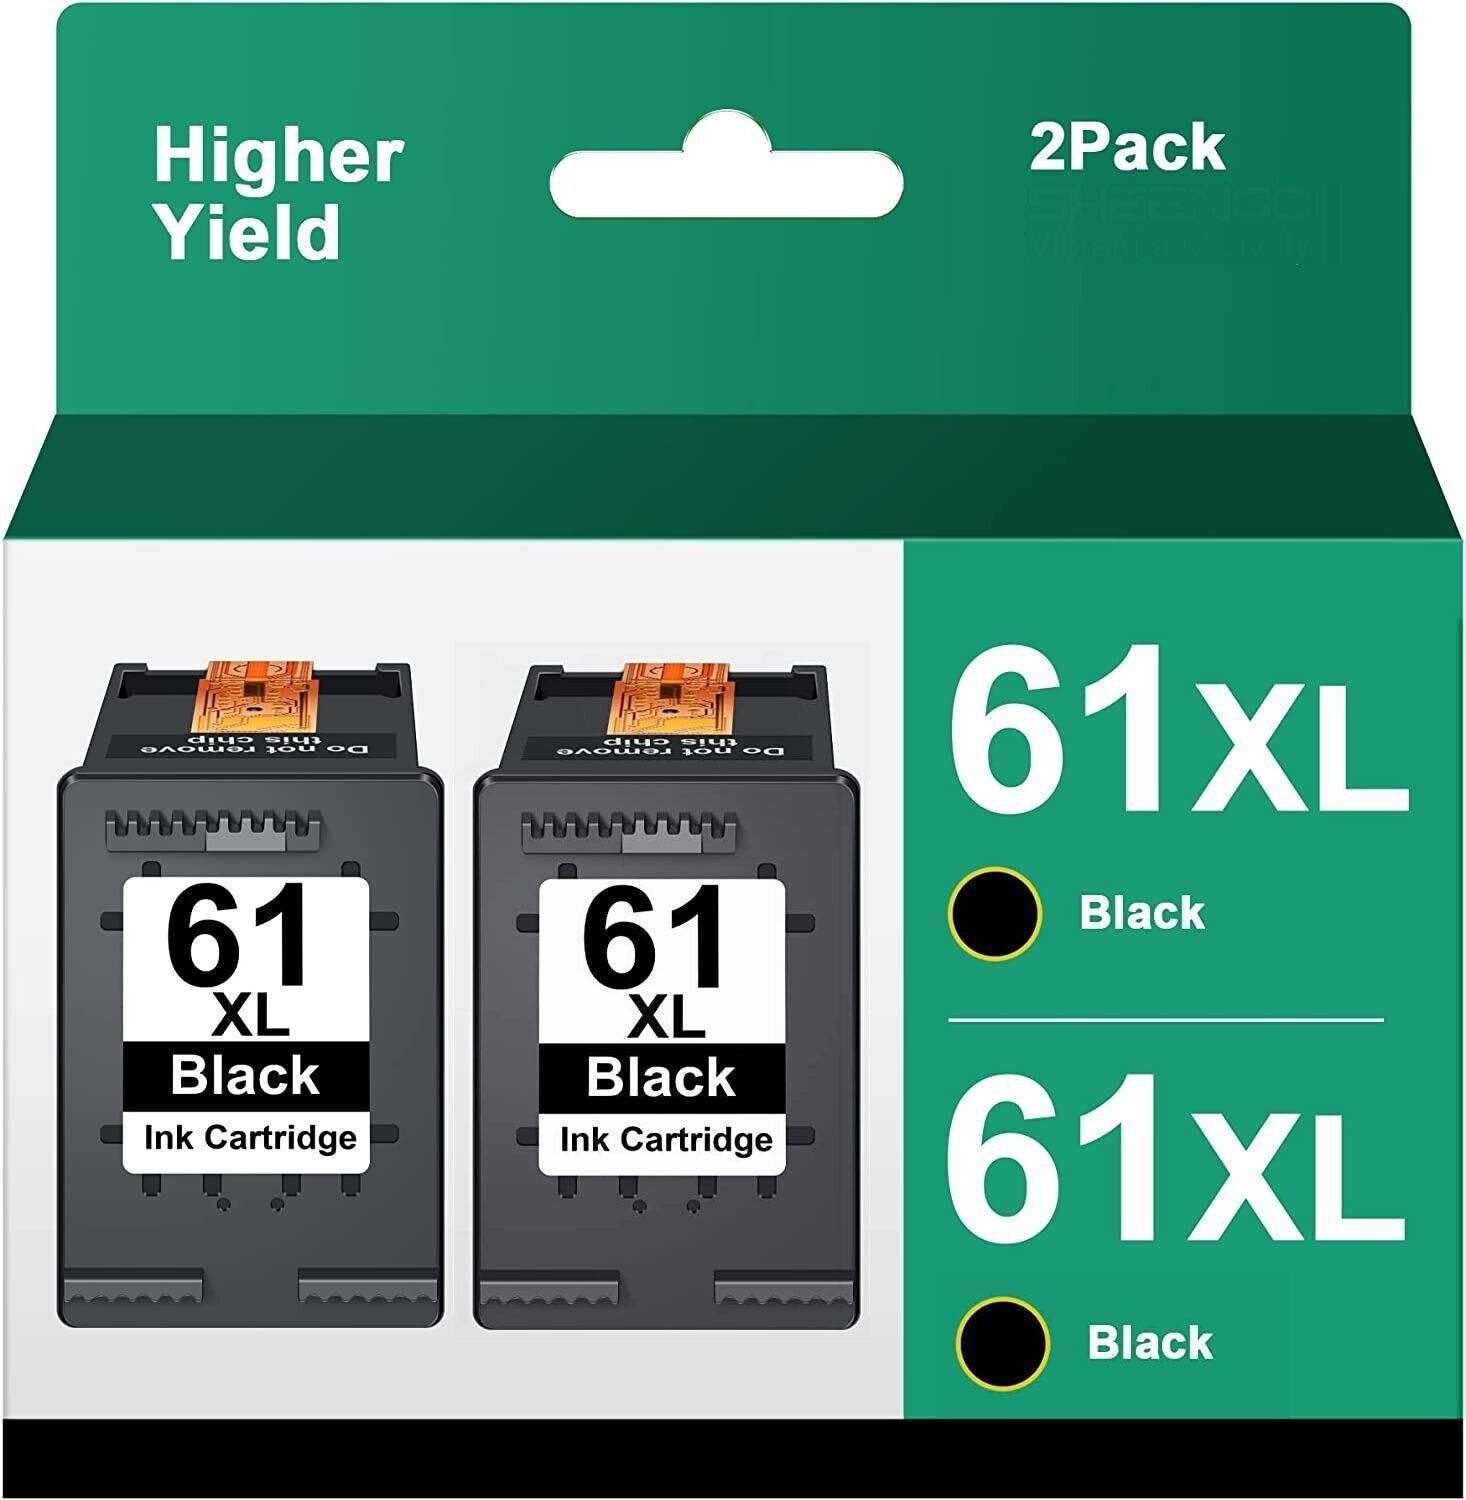 2 Pack Black HP 61 XL Ink Cartridge CH563WN for HP ENVY 4500 4501 4502 5530 5535